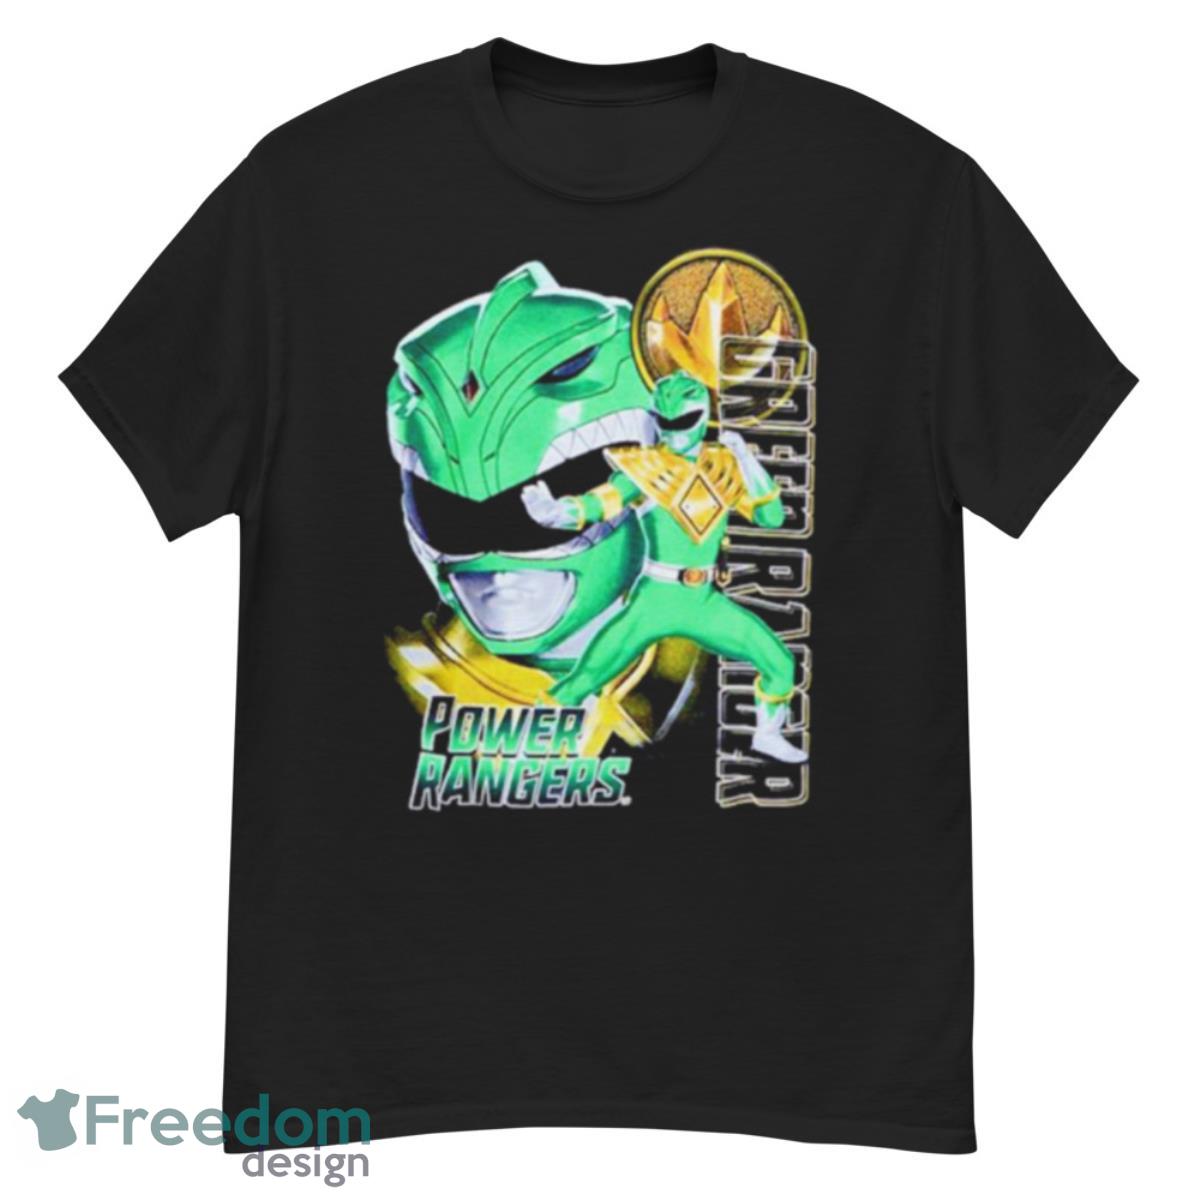 Unisex / Mens : Green Power Ranger Shirt / Ranger Shirt / 